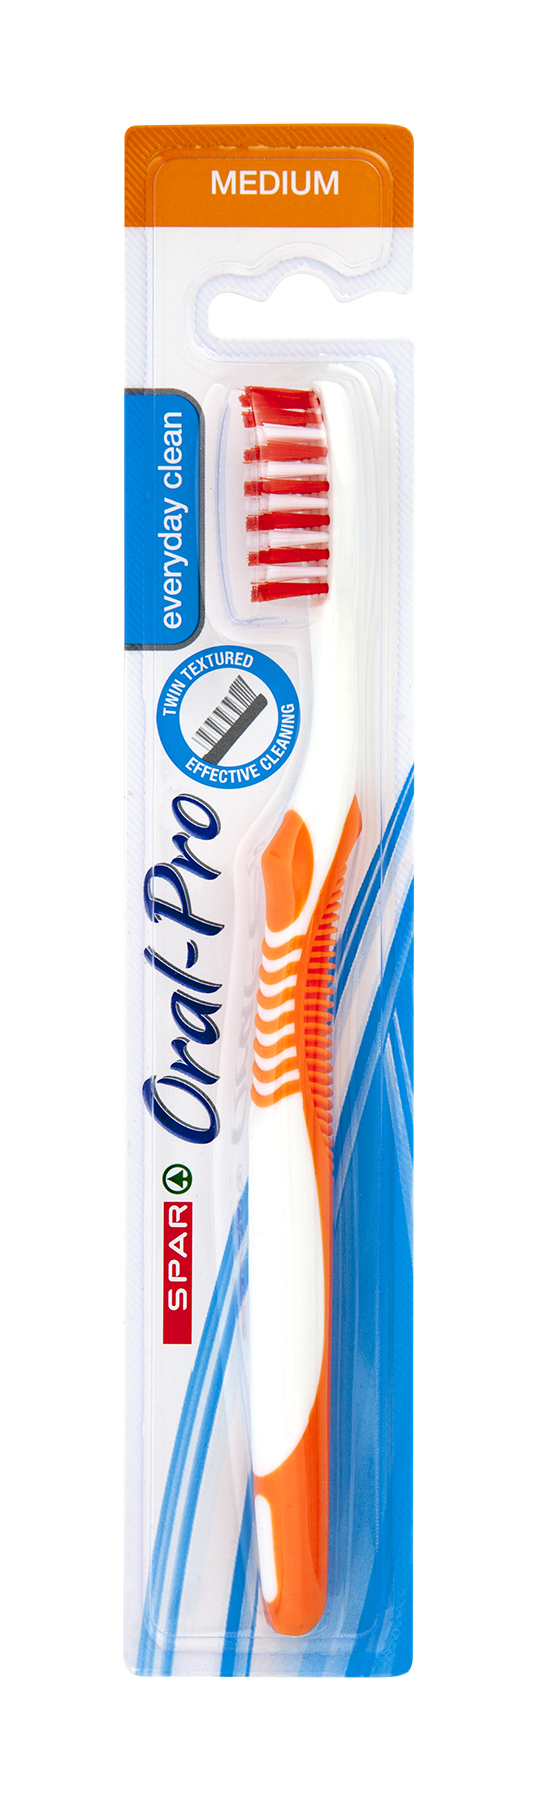 oral pro toothbrush everyday clean - medium